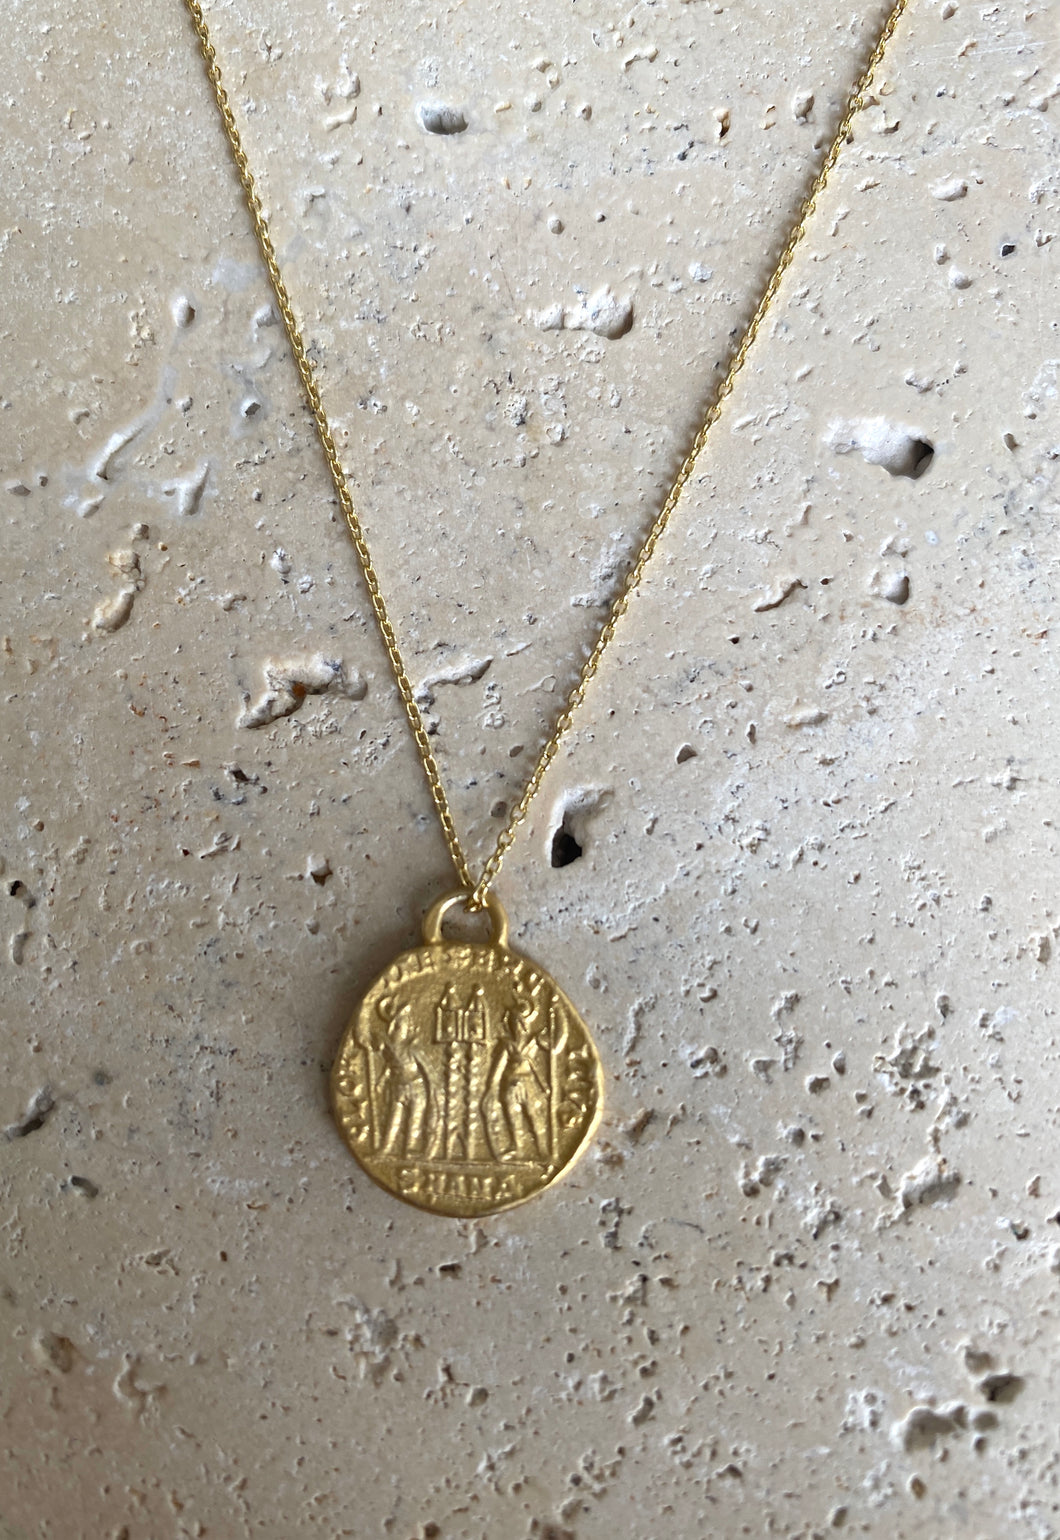 Ancient Roman coin necklace